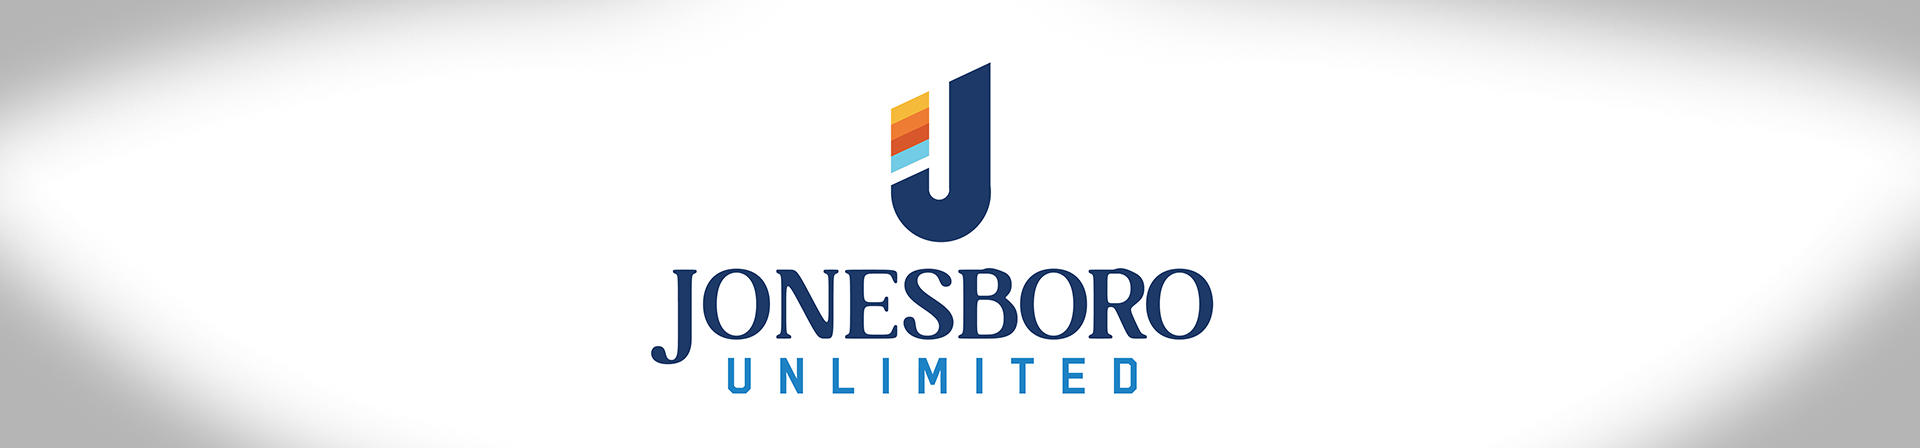 Jonesboro Unlimited logo on banner